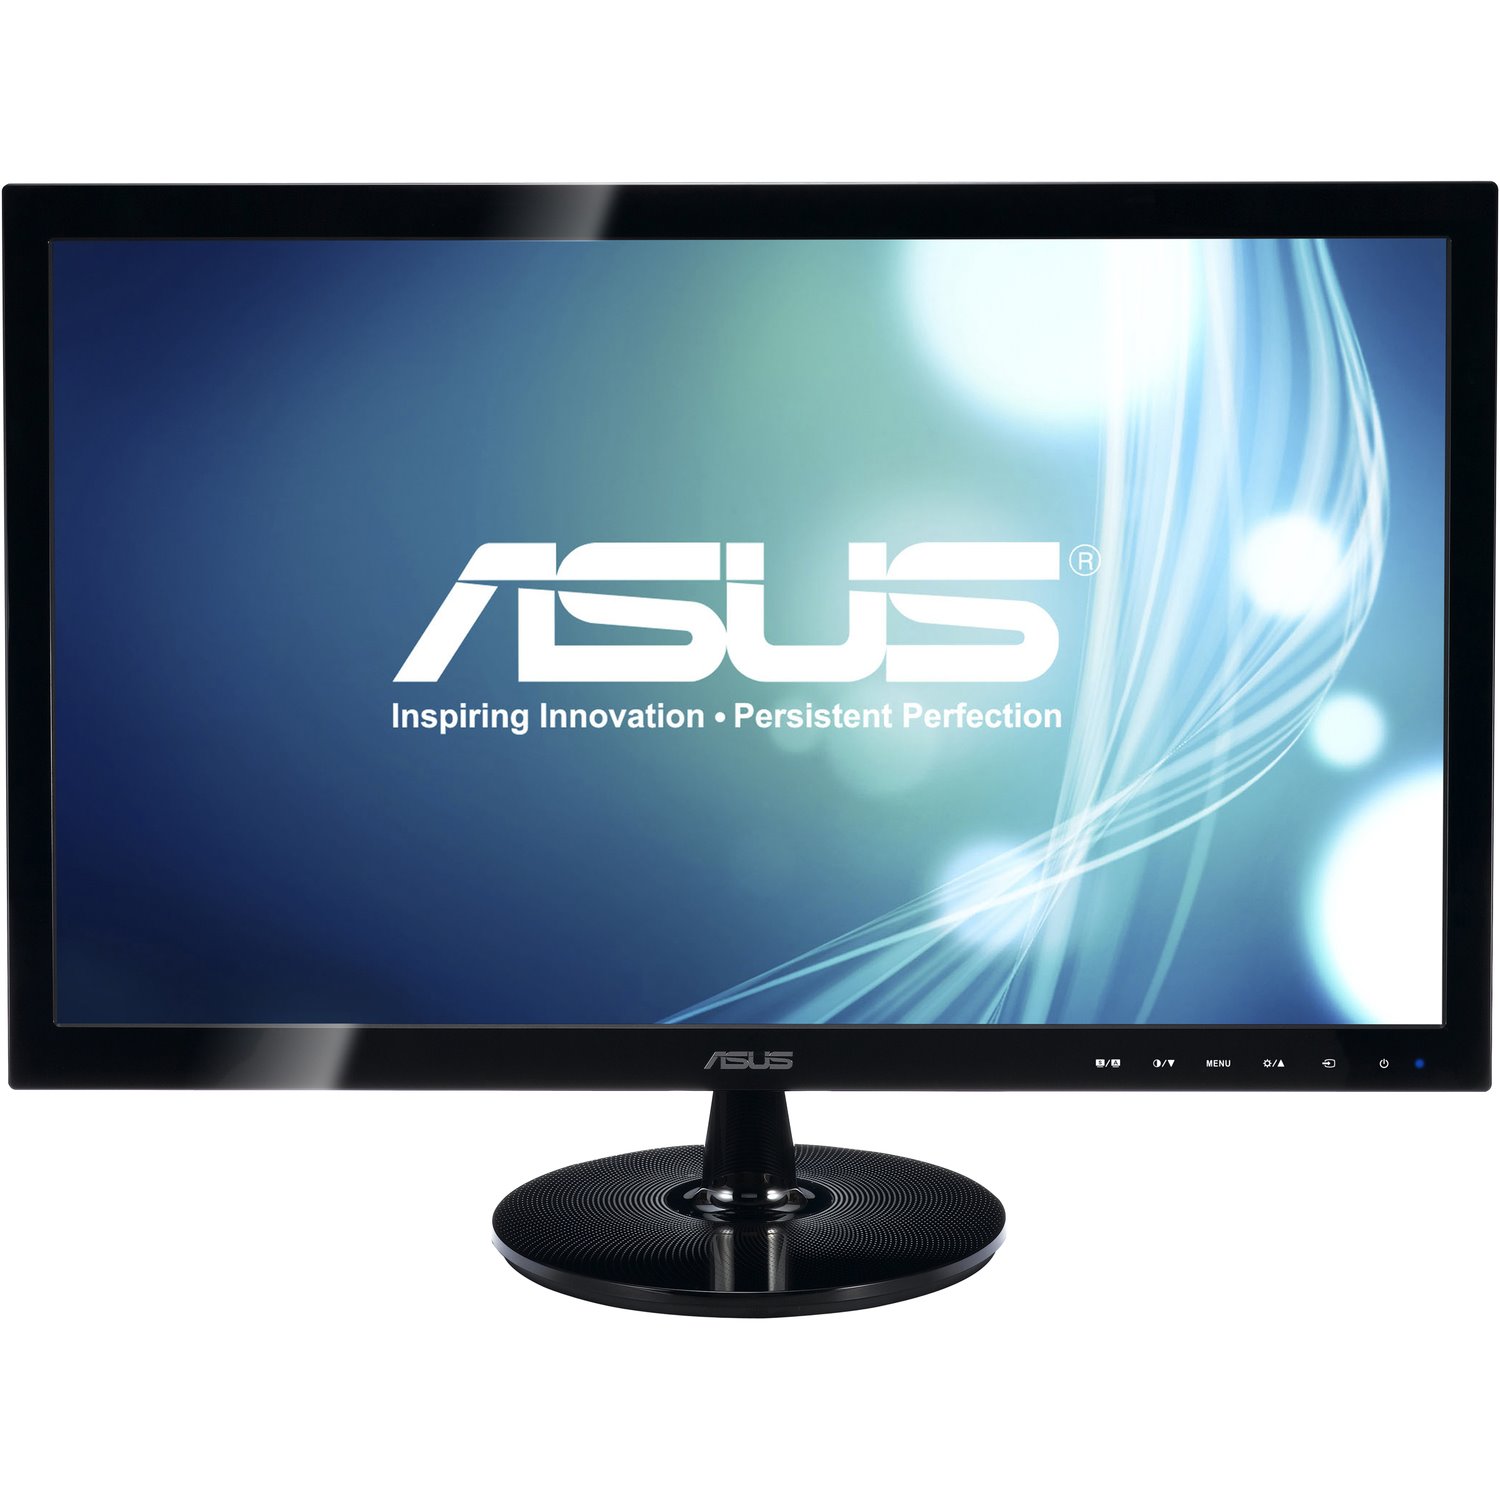 Asus VS228H-P 21.5" Full HD LED LCD Monitor - 16:9 - Black